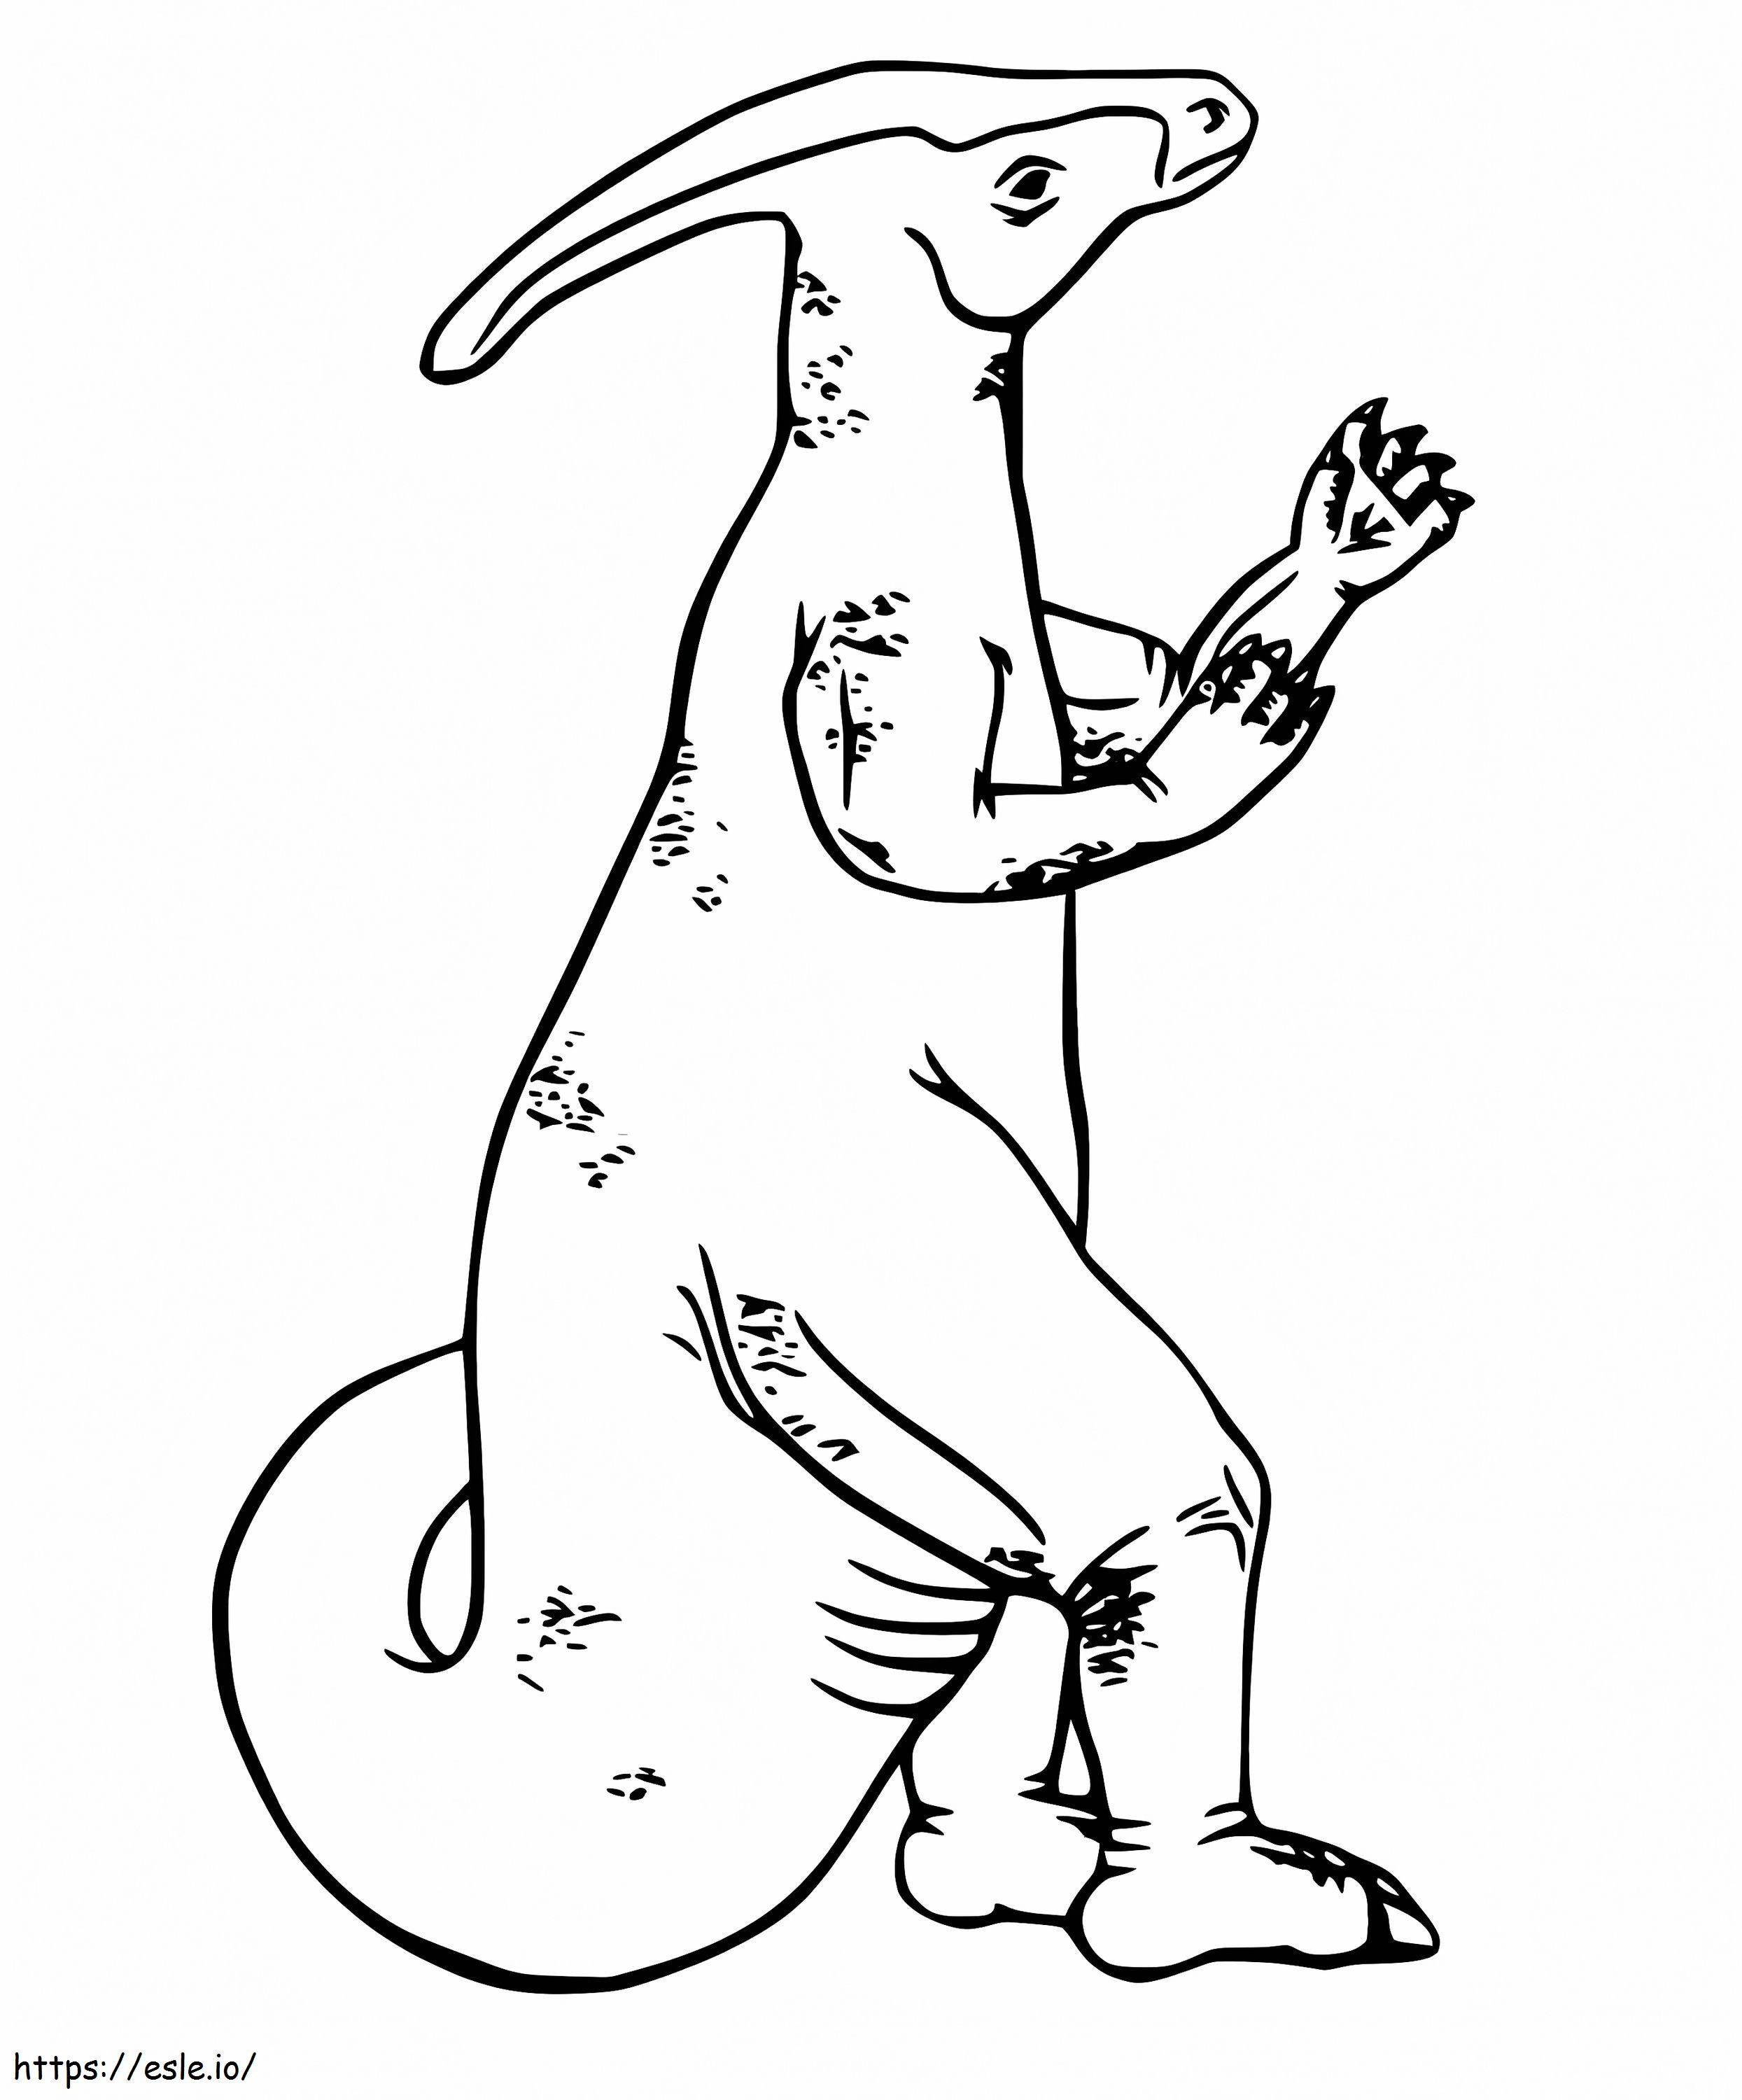 Parasaurolophus 7 coloring page